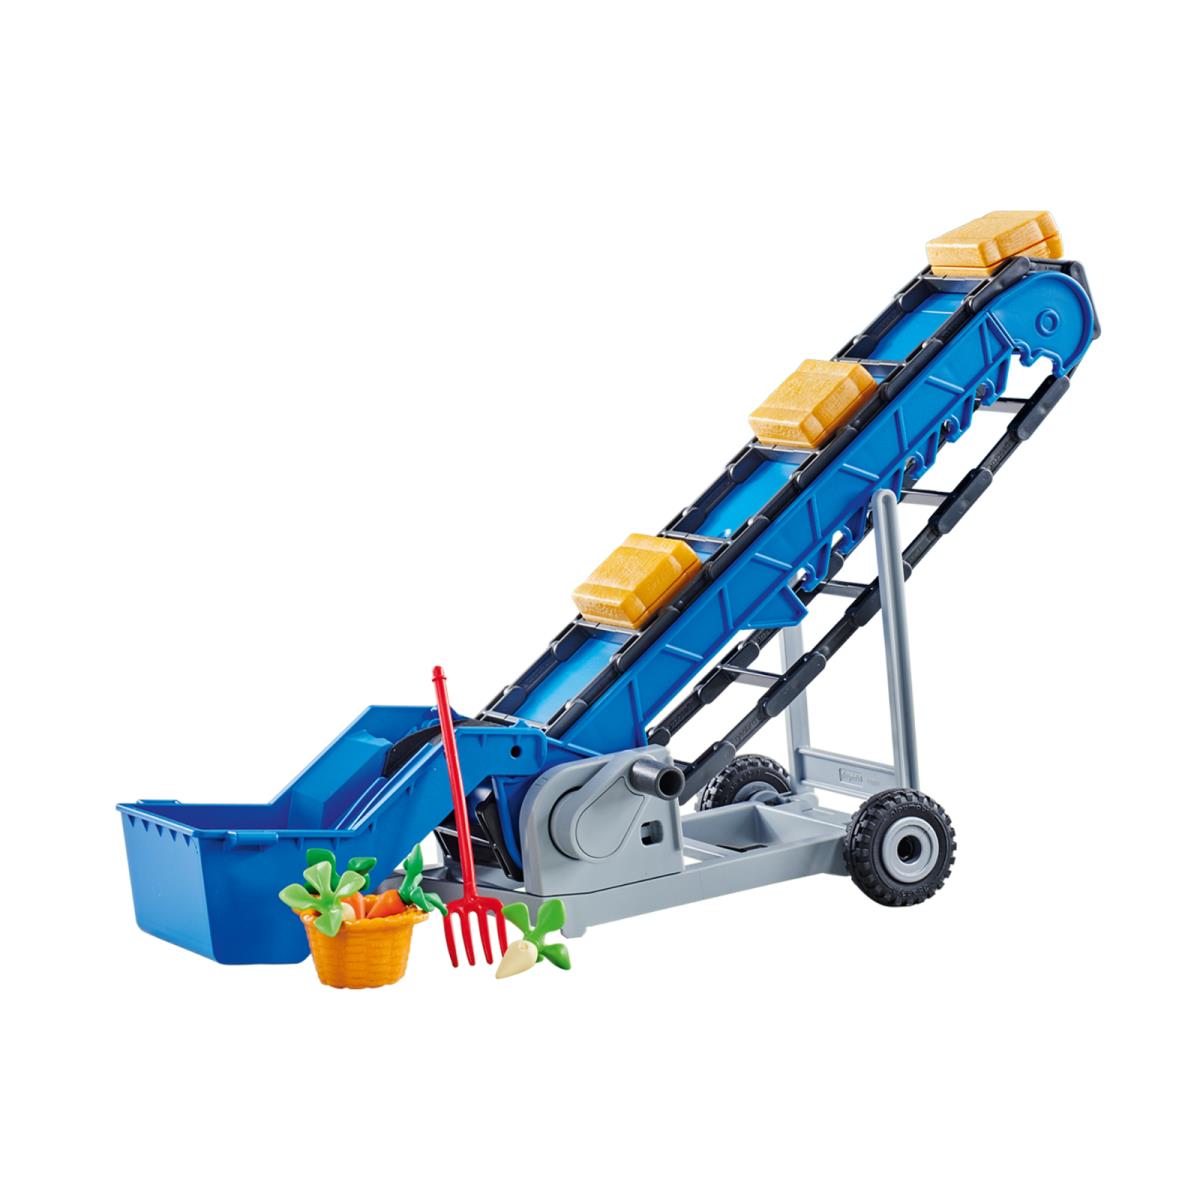 Playmobil Blue Mobile Conveyor Set 6576 in Package